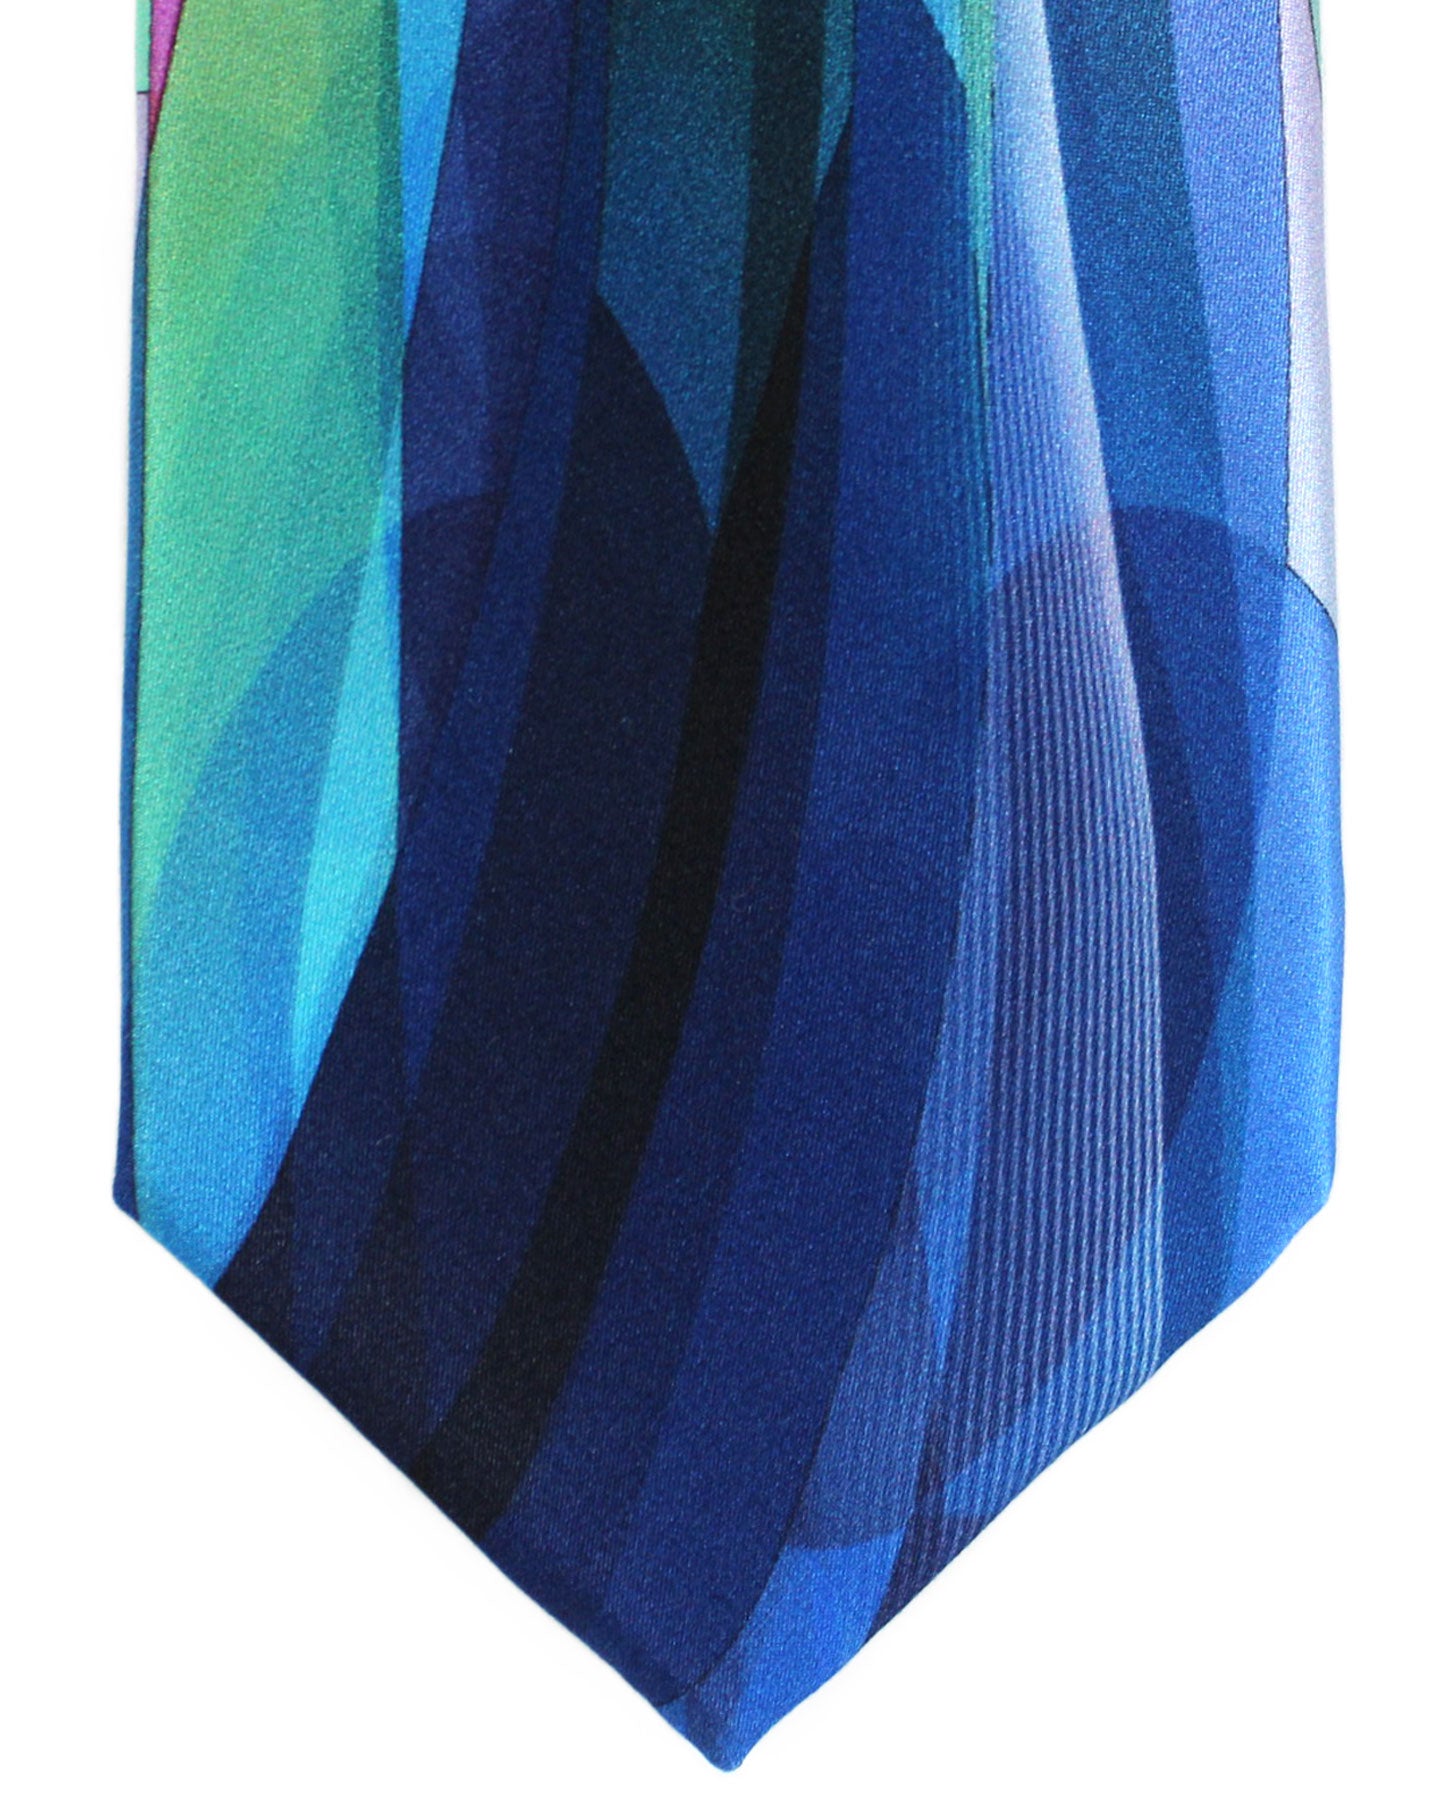 Vitaliano Pancaldi Silk Tie Blue Green Swirl Design